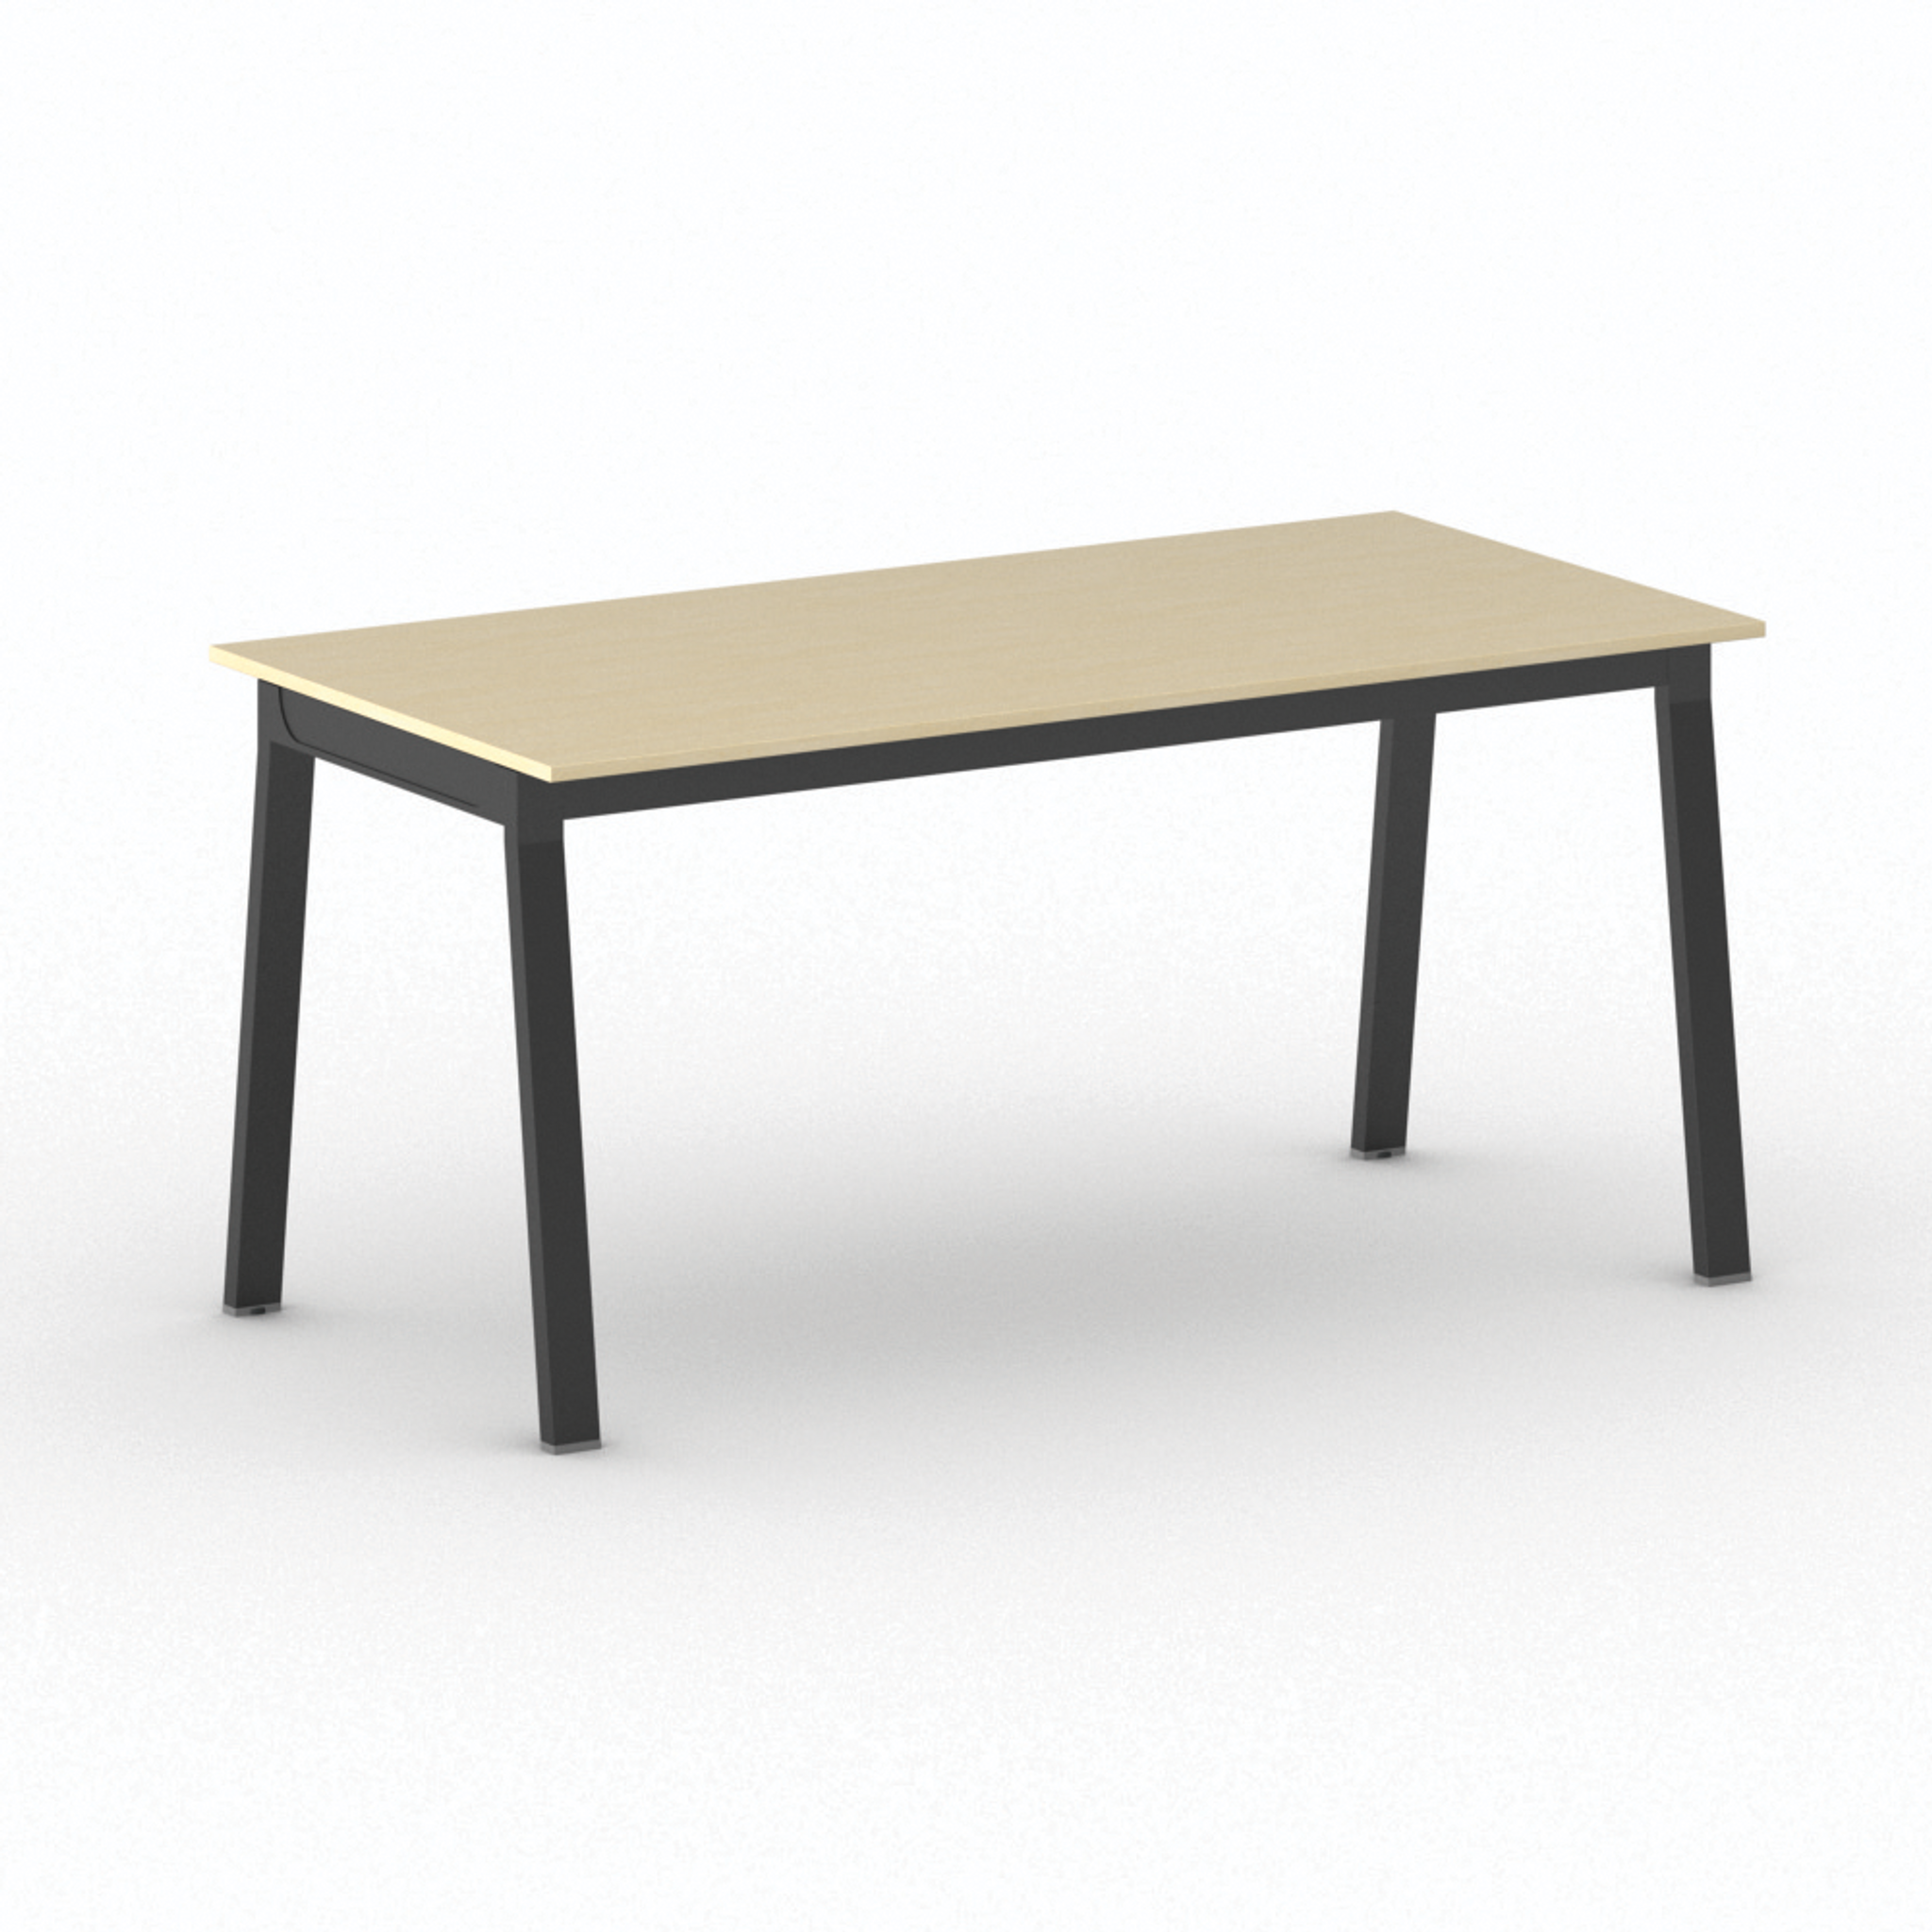 Stůl PRIMO BASIC, 1600 x 800 x 750 mm